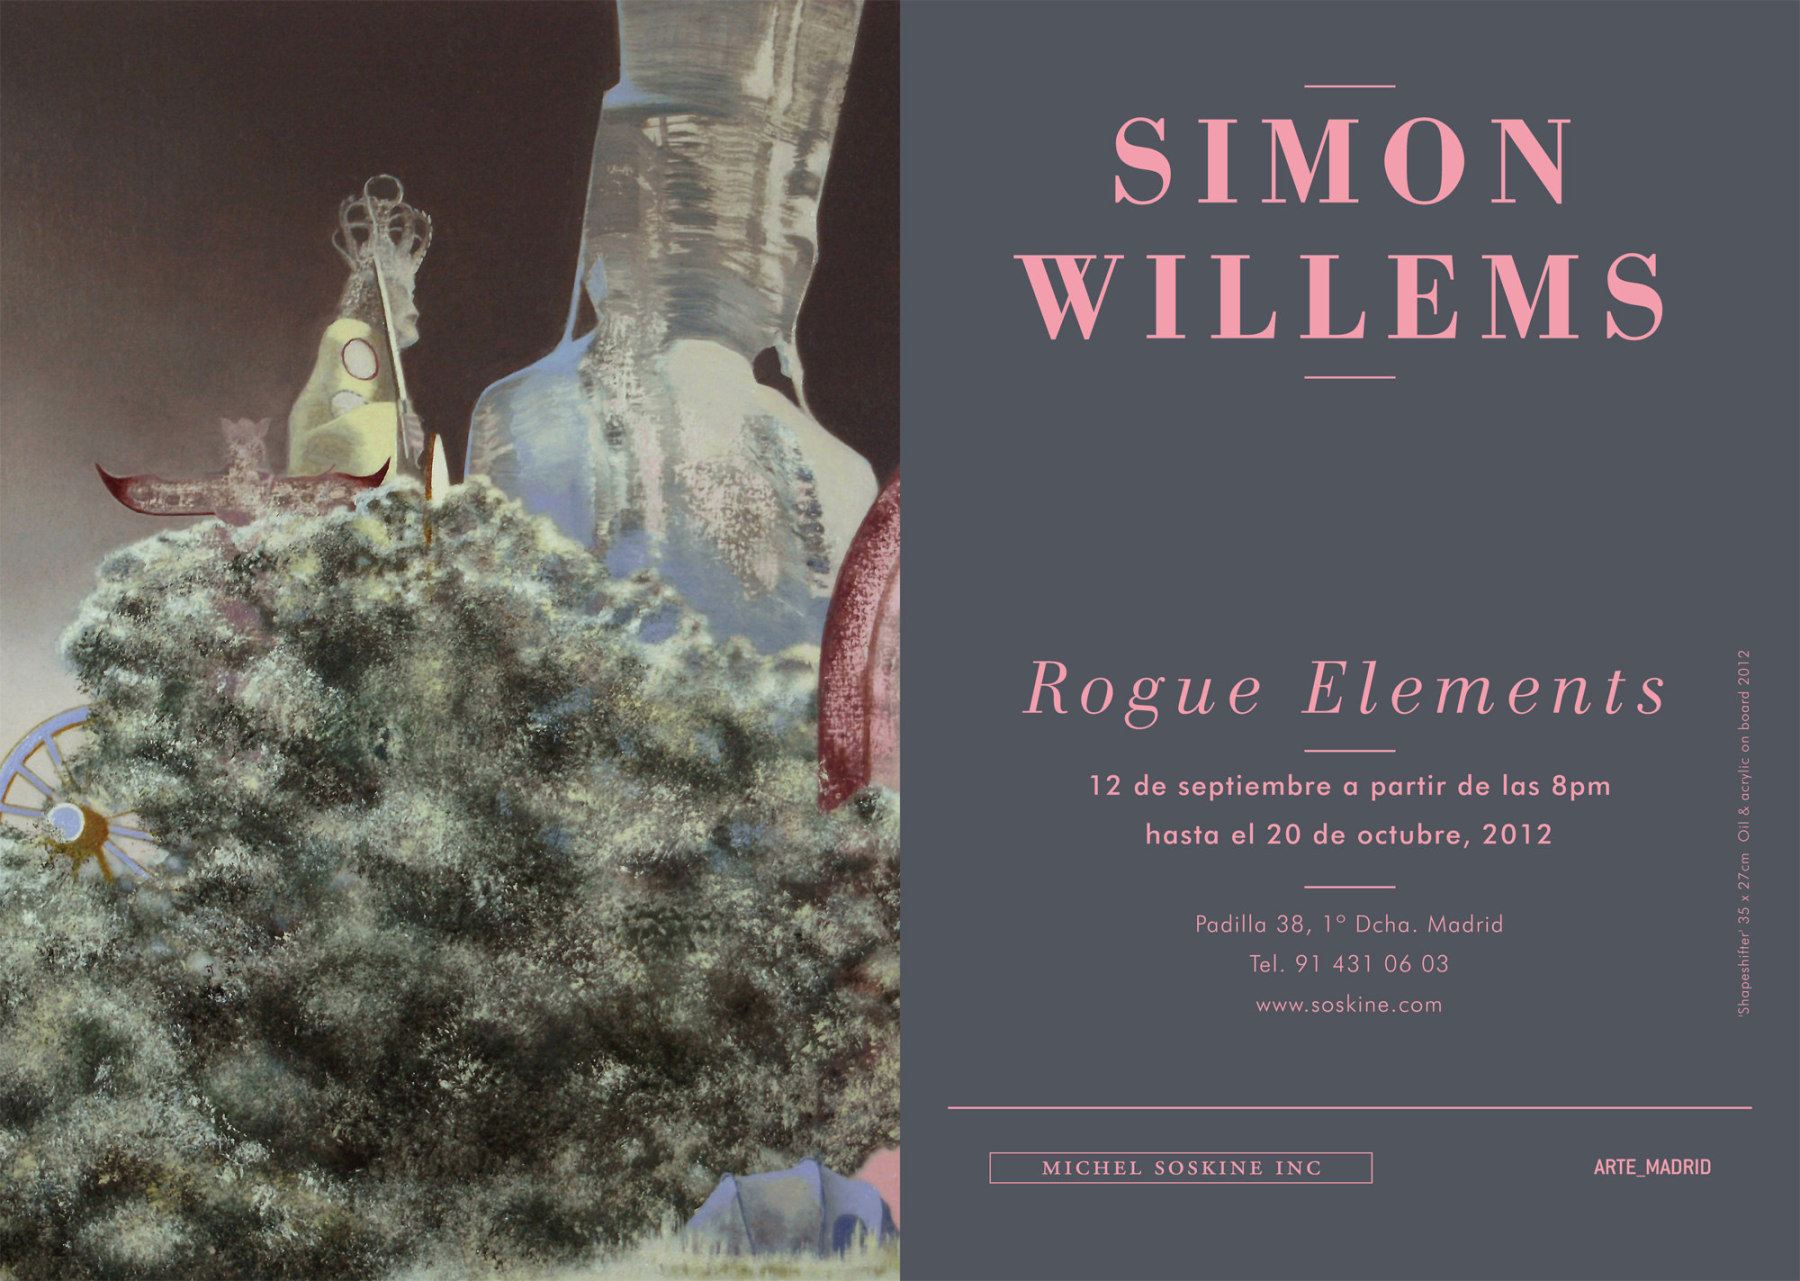 SIMON WILLEMS